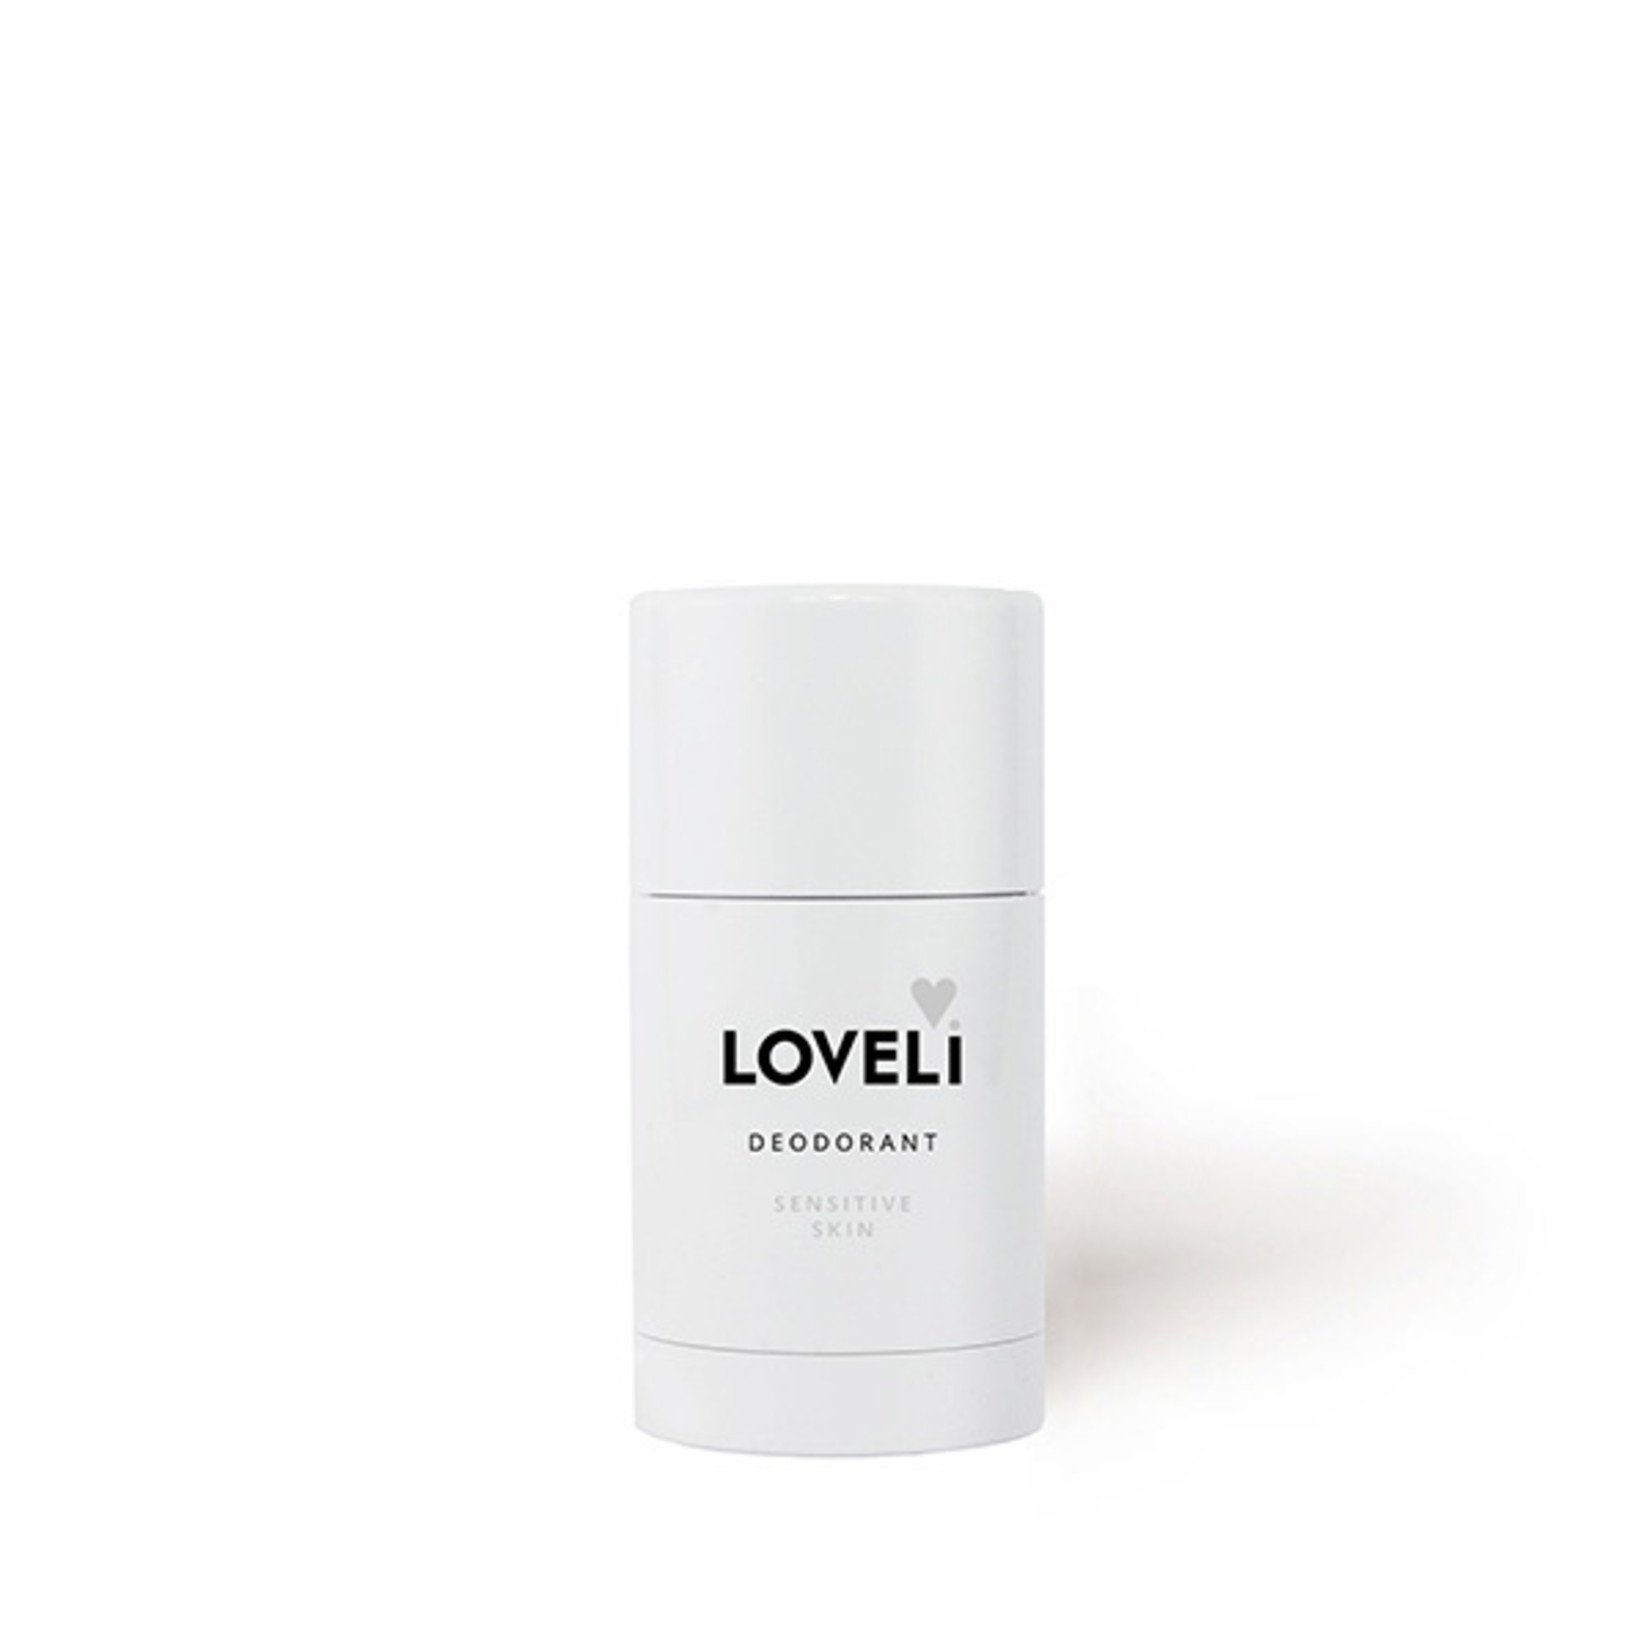 Loveli.Care Loveli Deodorant Sensitive skin